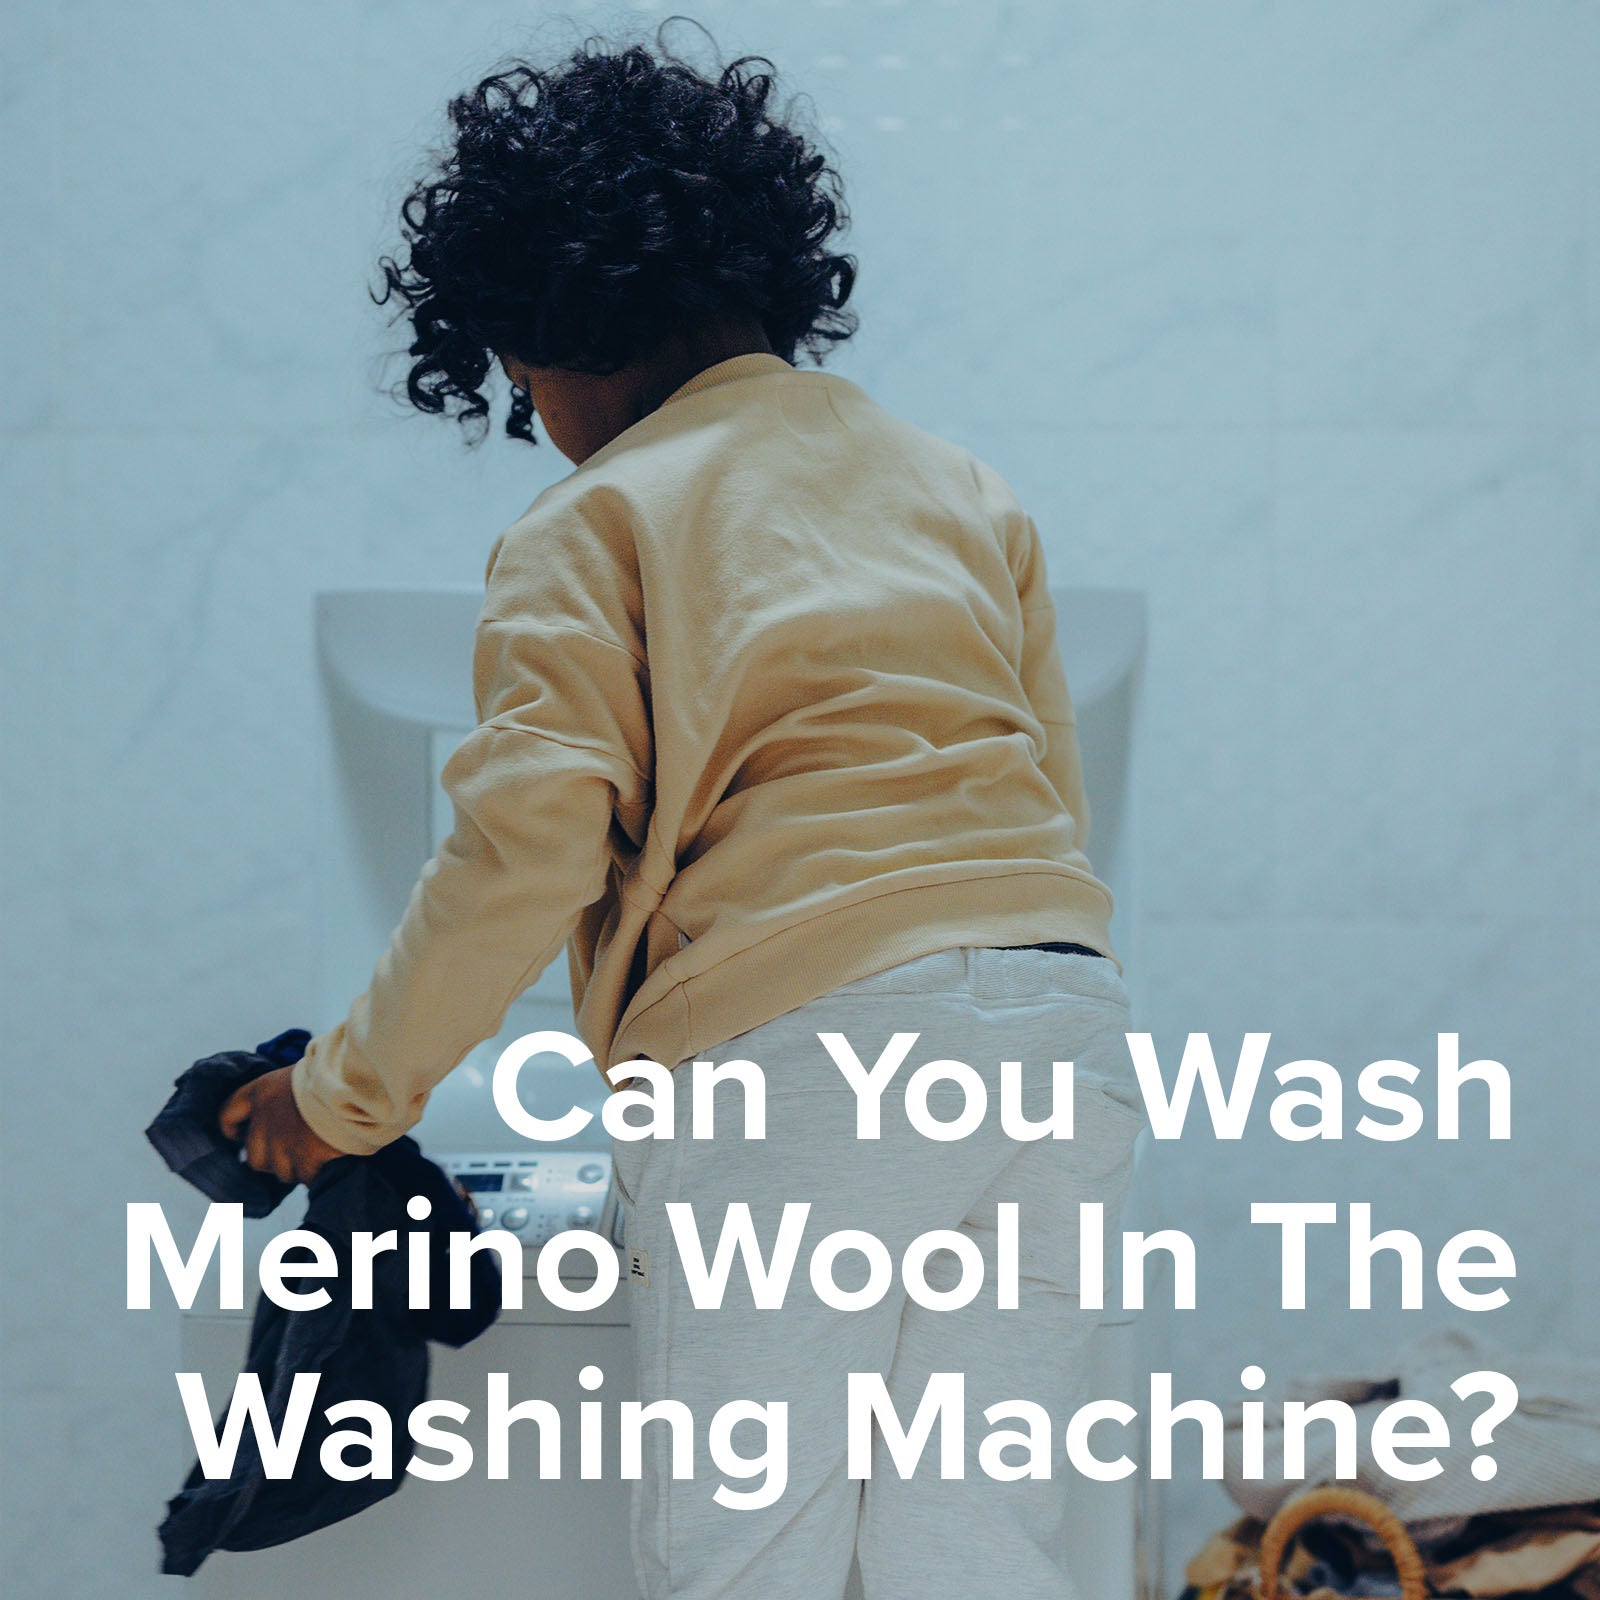 Can You Wash Merino Wool In The Washing Machine?